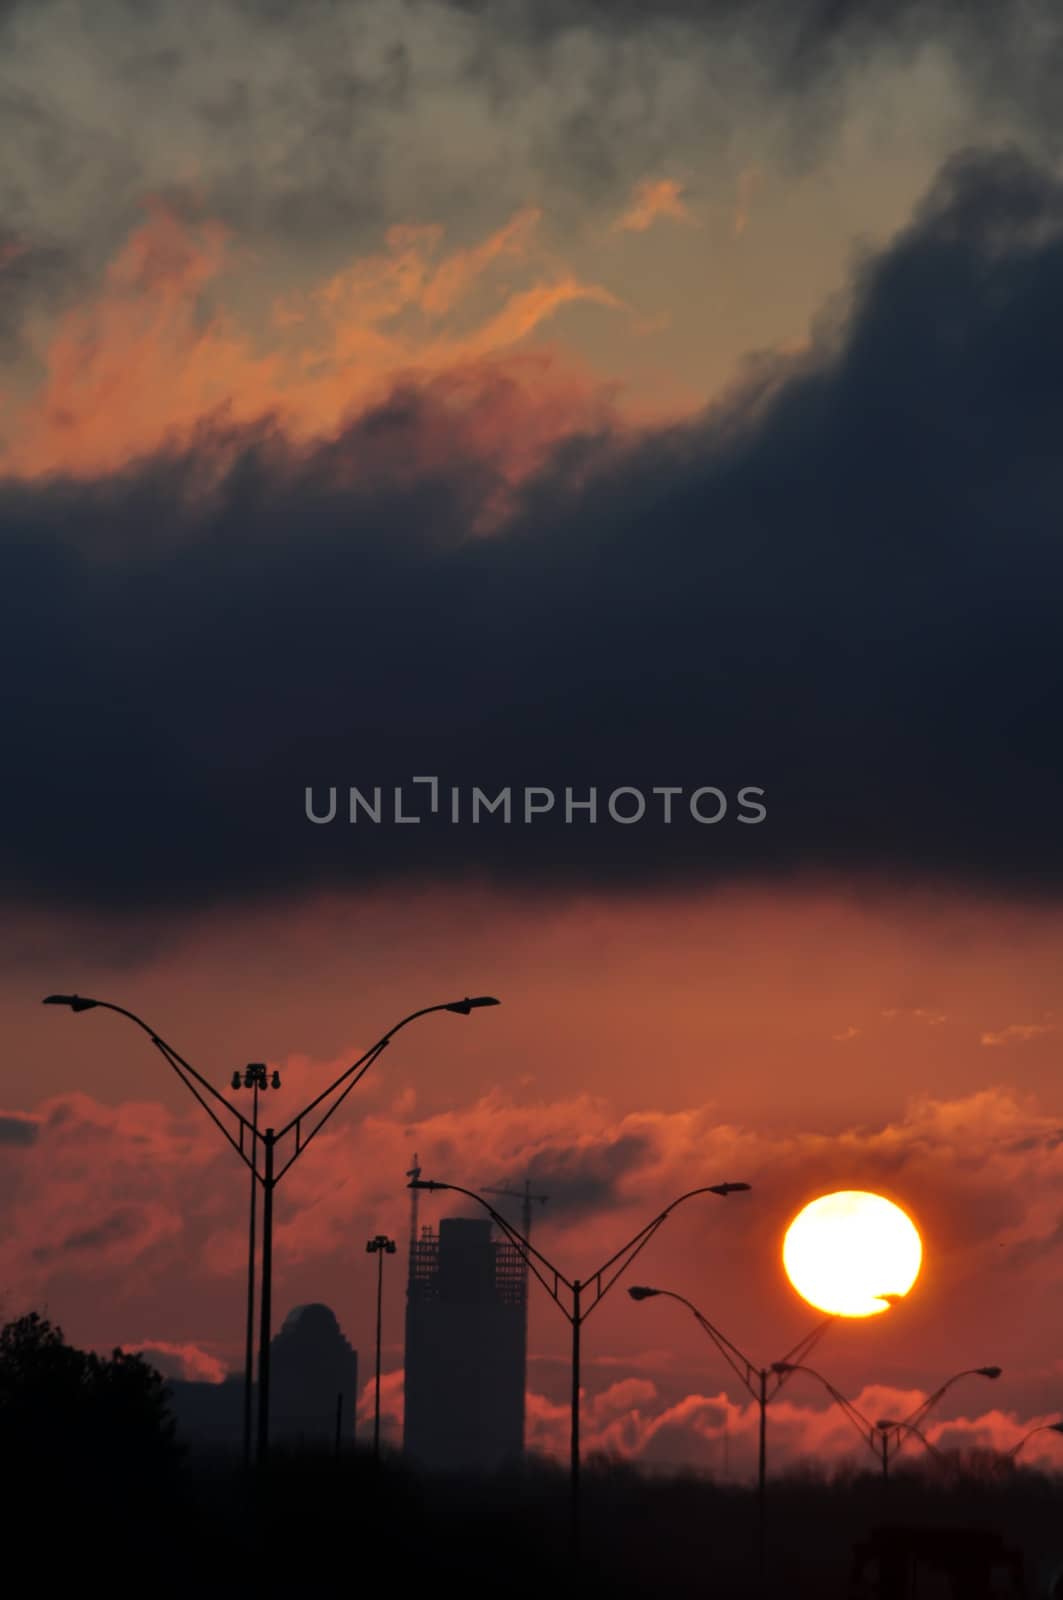 dramatic sunrise over city by digidreamgrafix